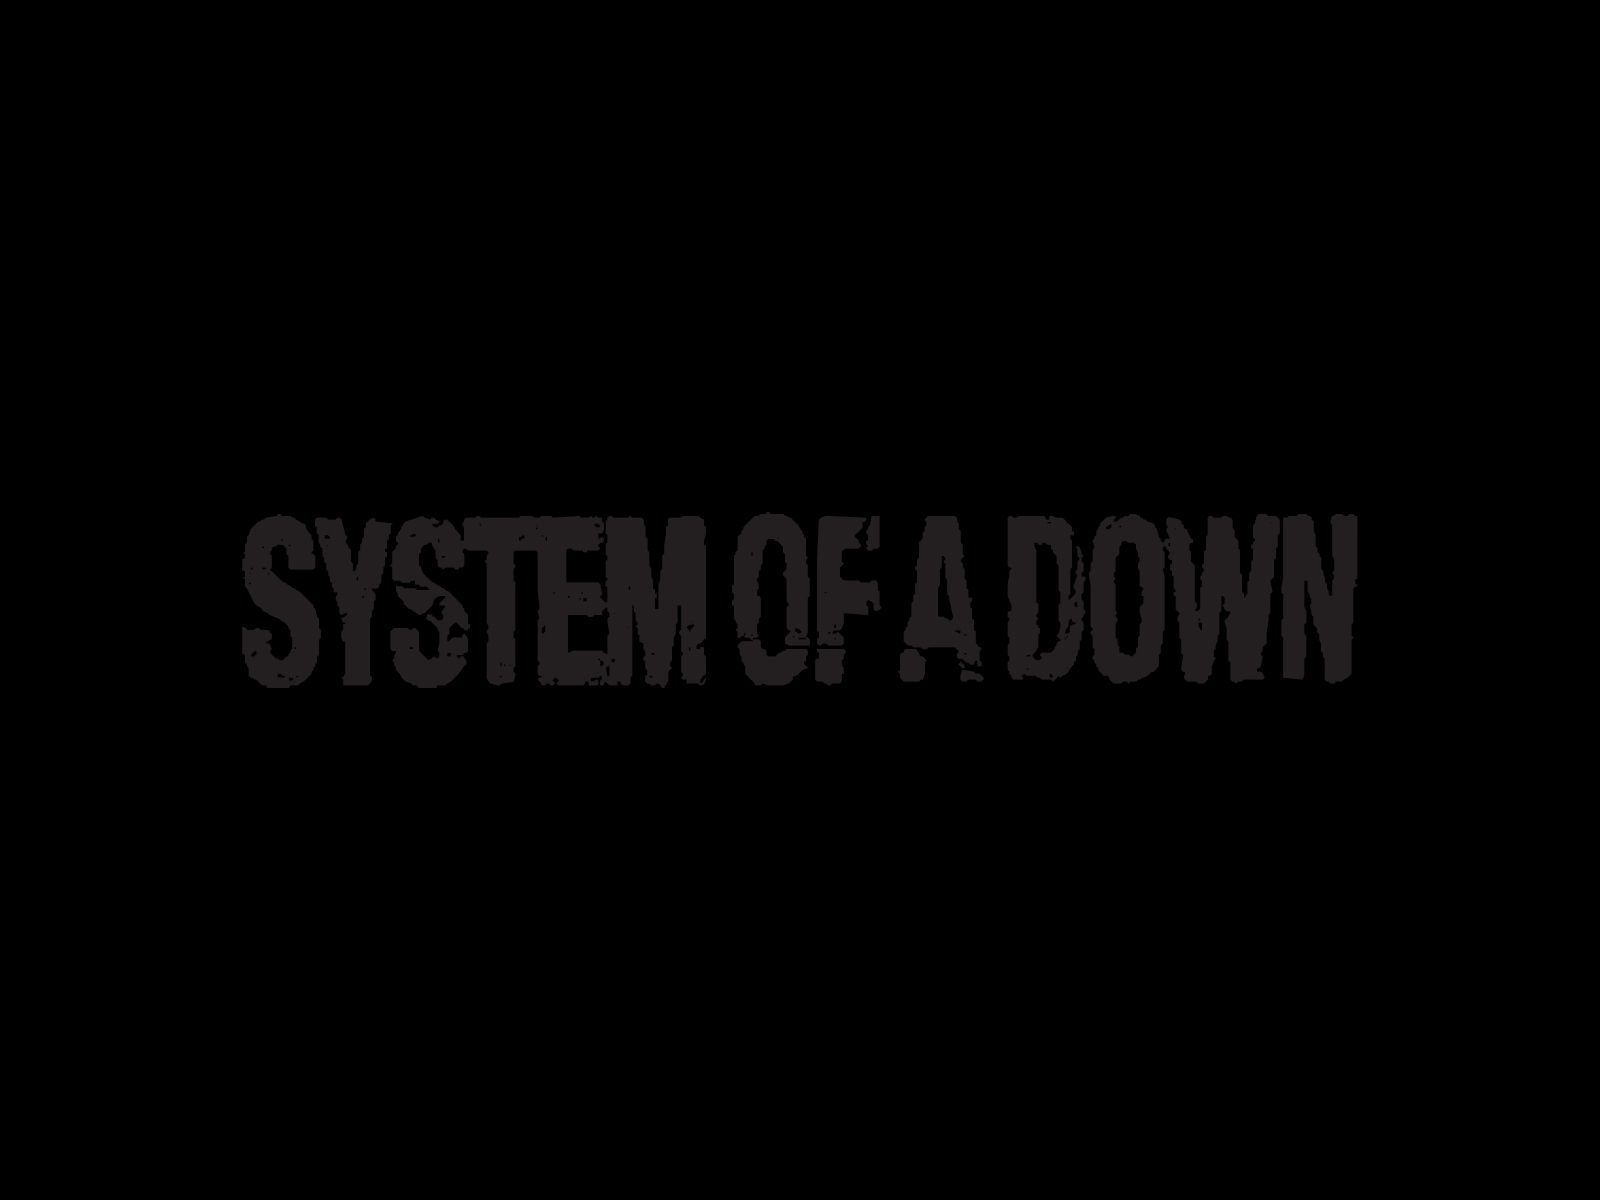 System of a down logo and wallpaper Band logos - Rock band logos